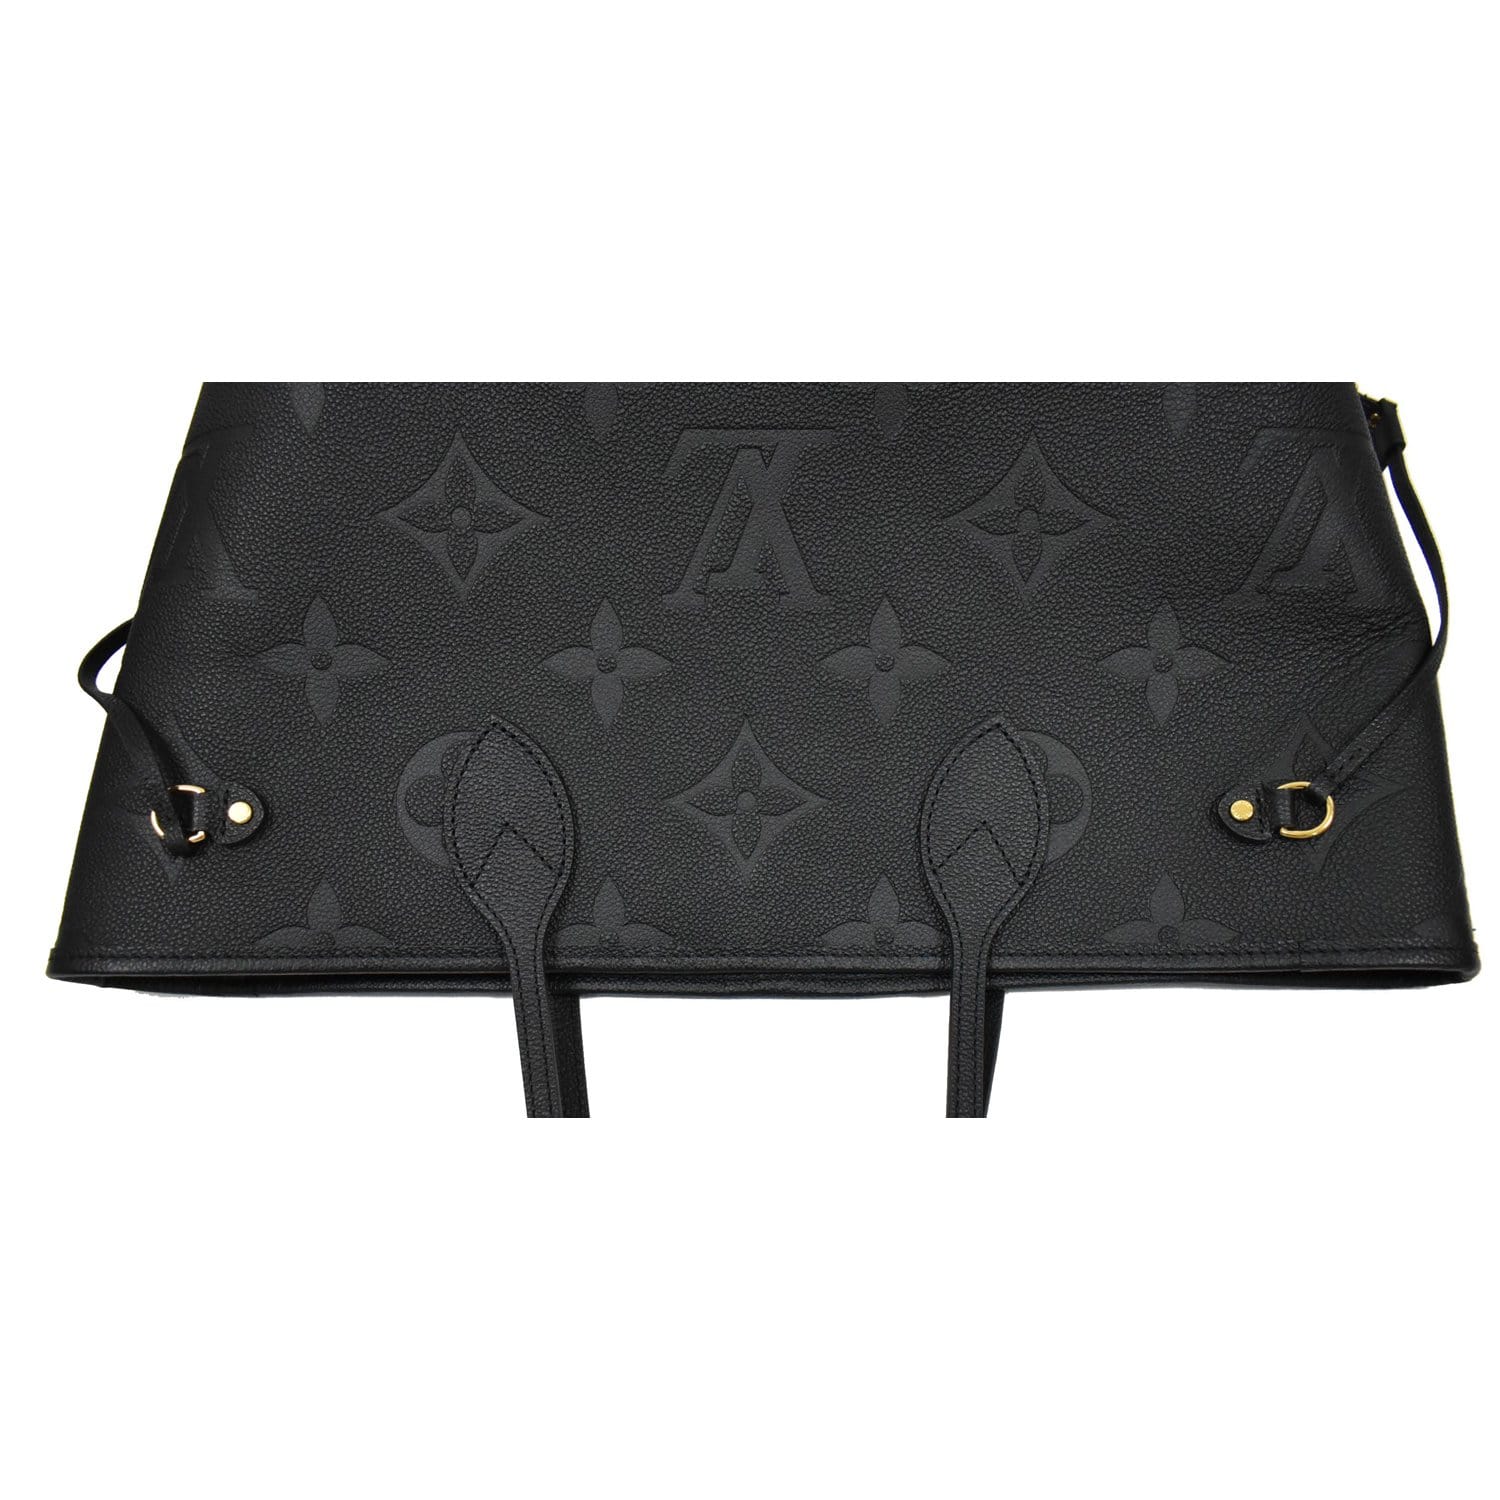 Louis Vuitton Neverfull MM Black Tote Bag